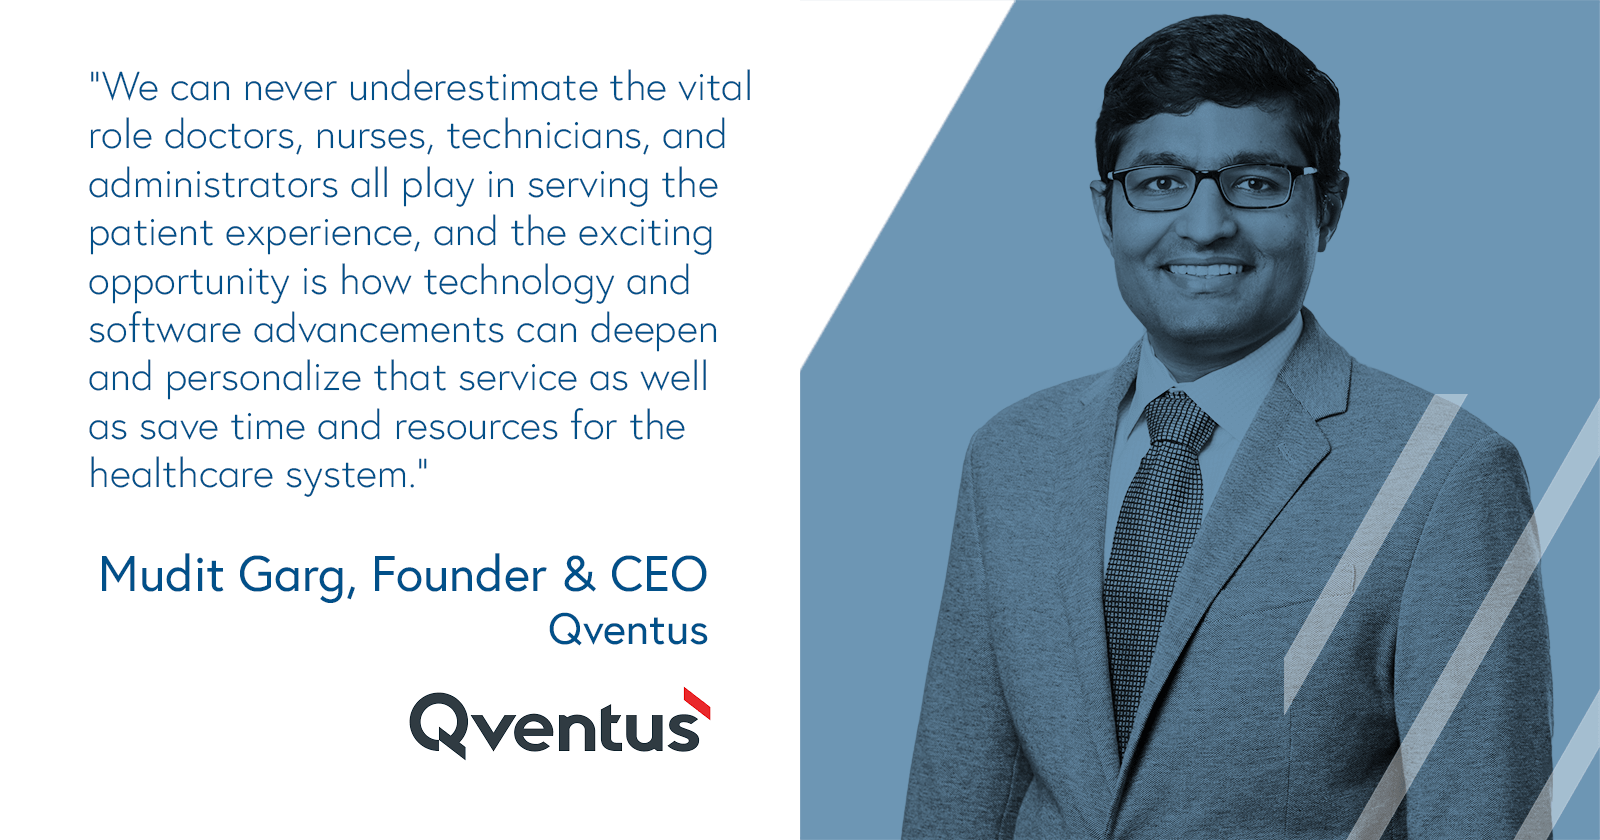 Mudit Garb, Founder and CEO, Qventus